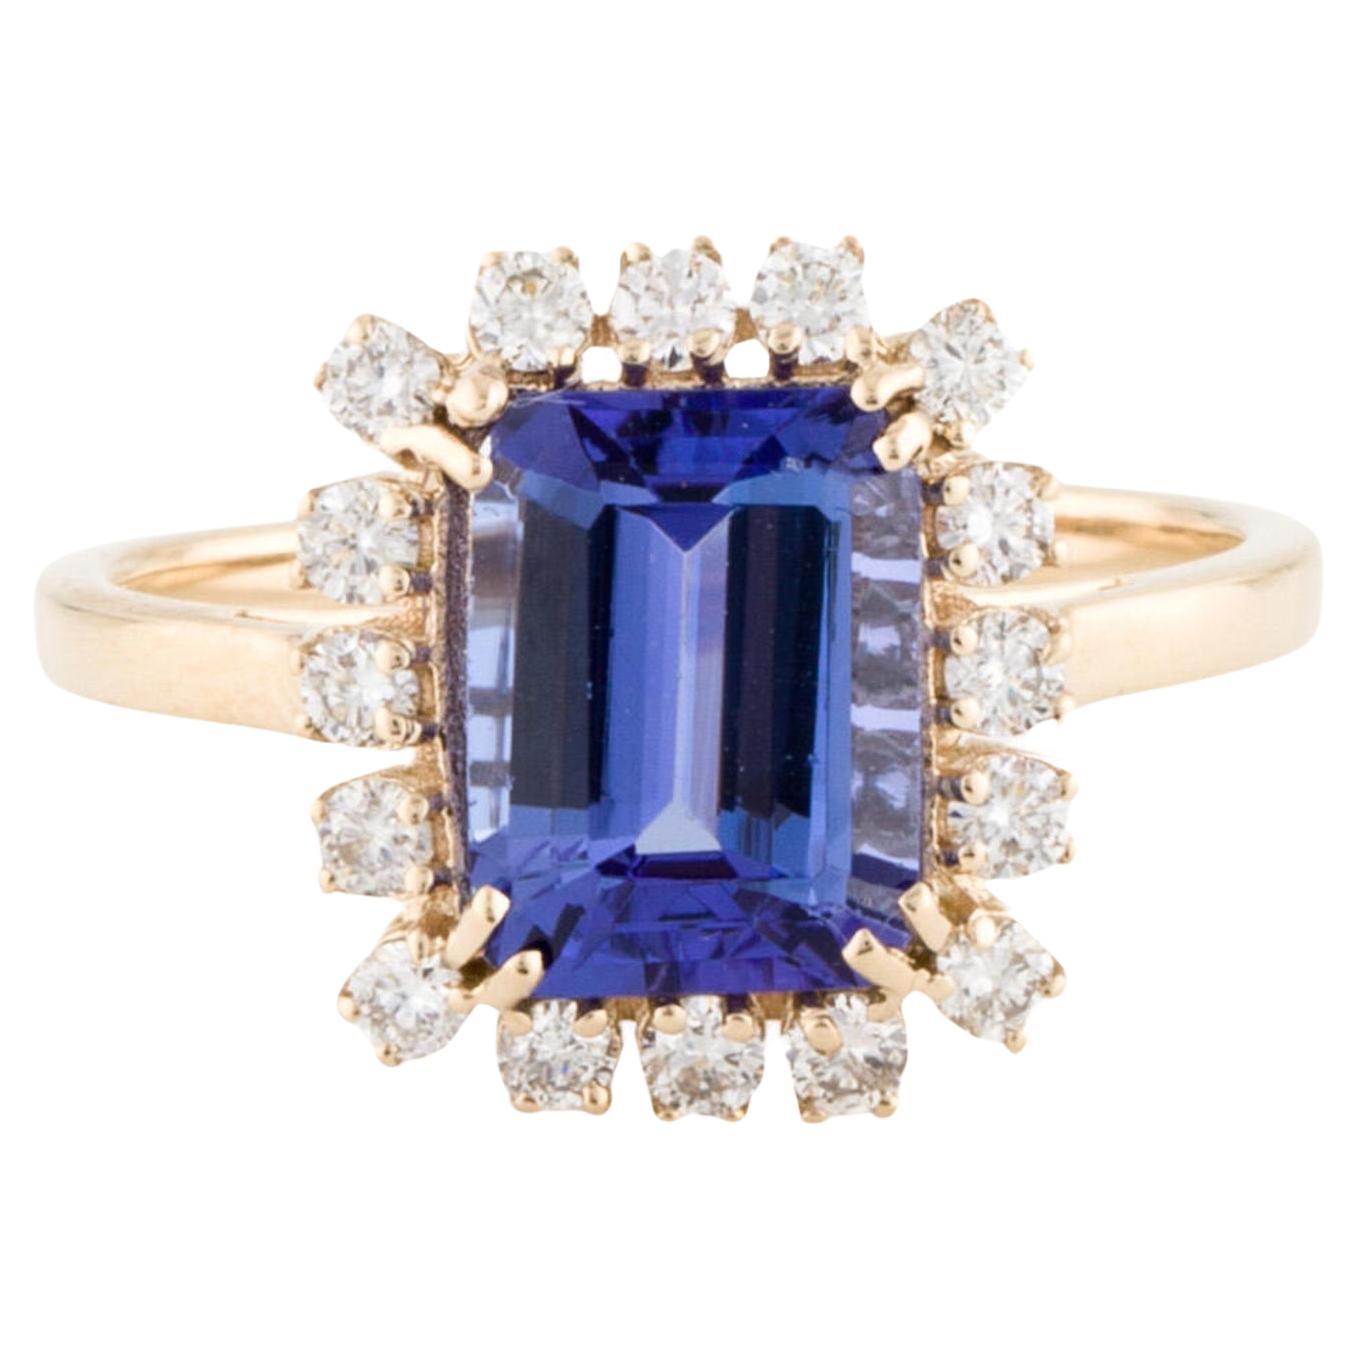 14K Tanzanite & Diamond Cocktail Ring 2.32ctw - Size 6.75 - Elegant Jewelry For Sale